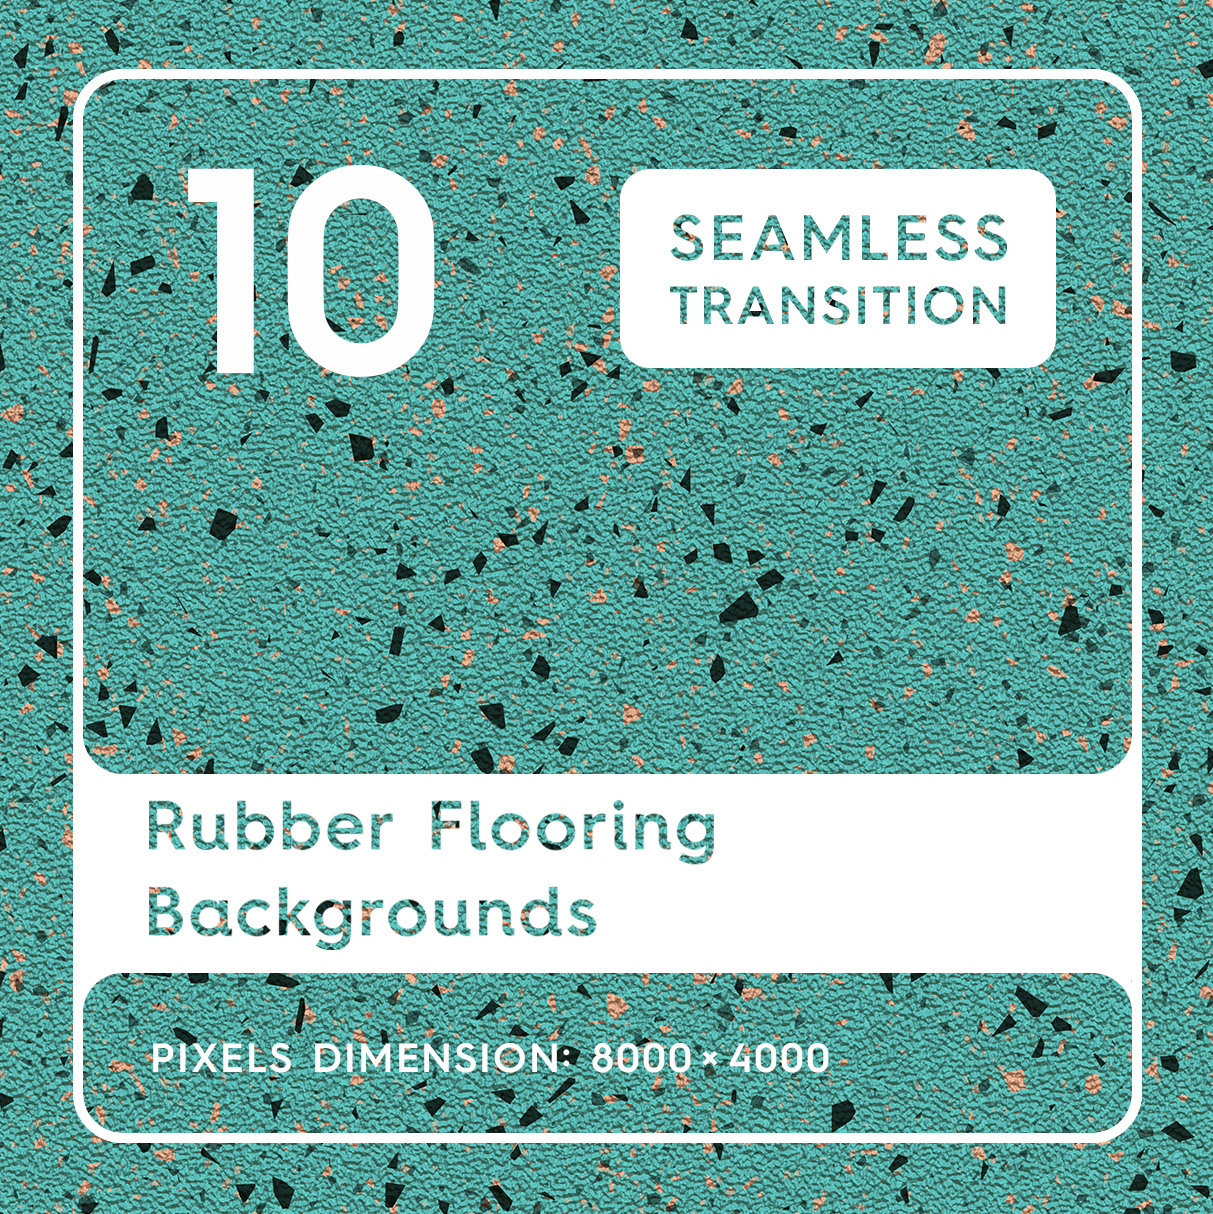 10 Rubber Flooring Backgrounds